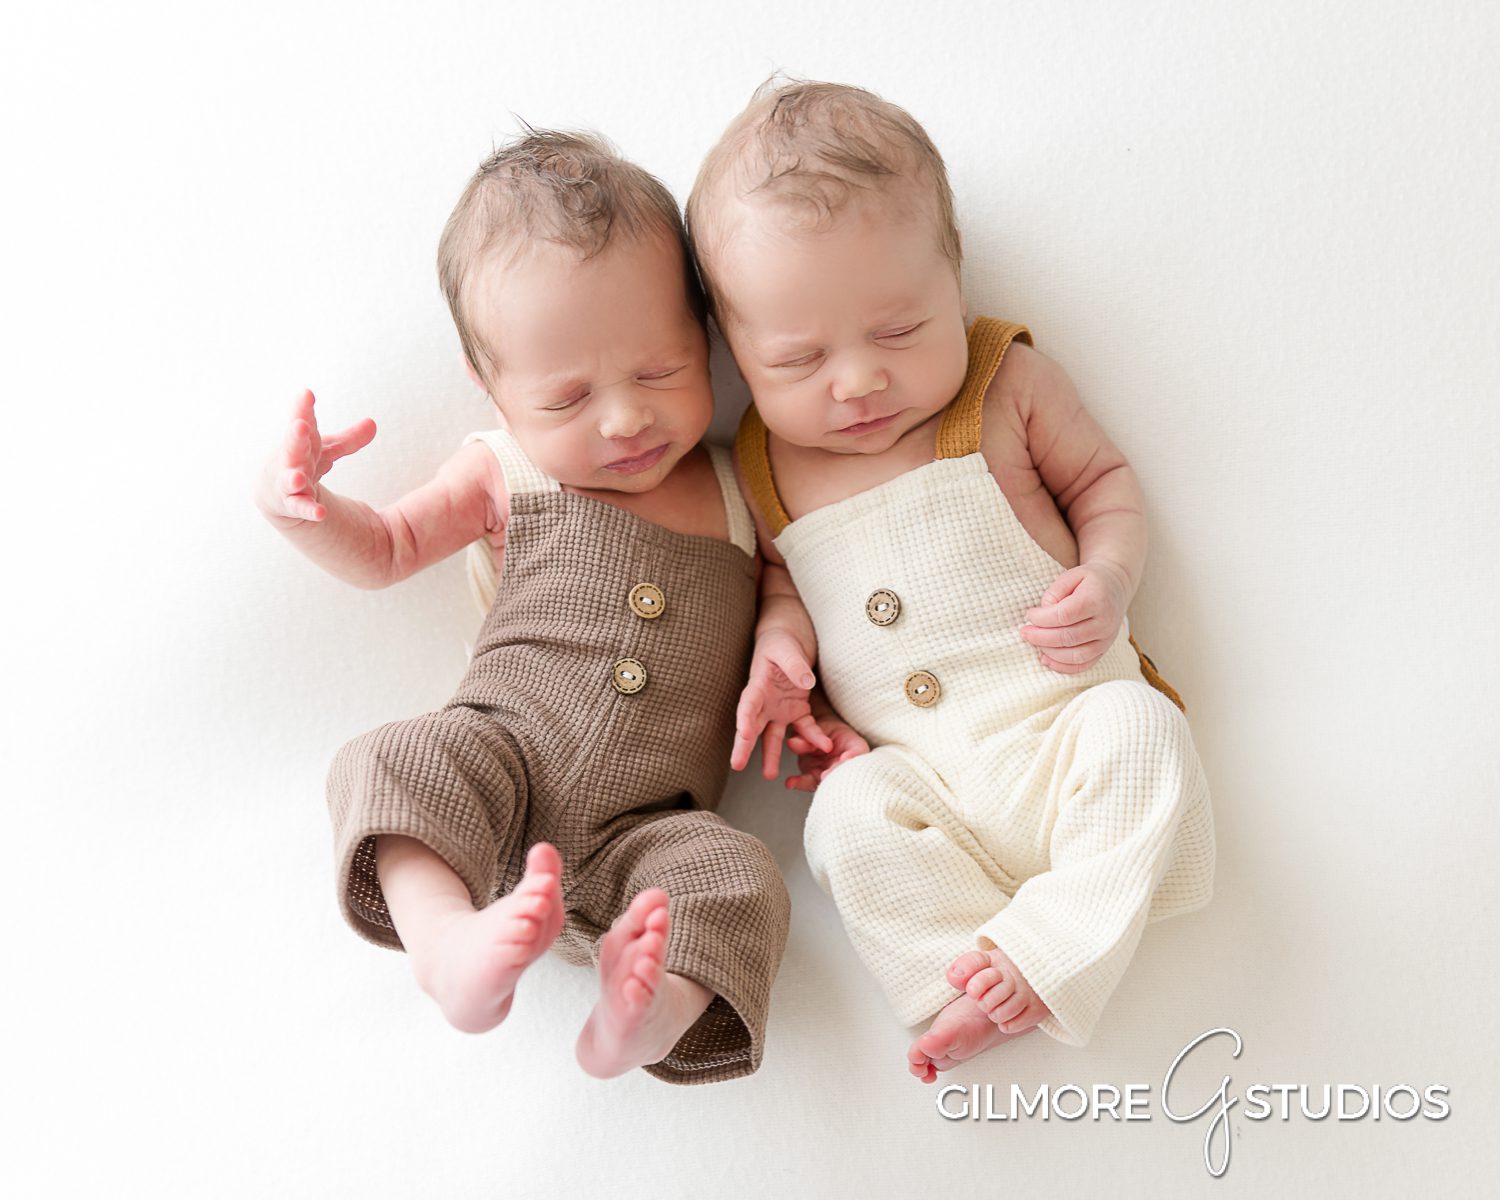 Twin Newborn baby boys, Gilmore Studios Newborn Photography studio, Newport Beach, CA - Orange County children's photographer